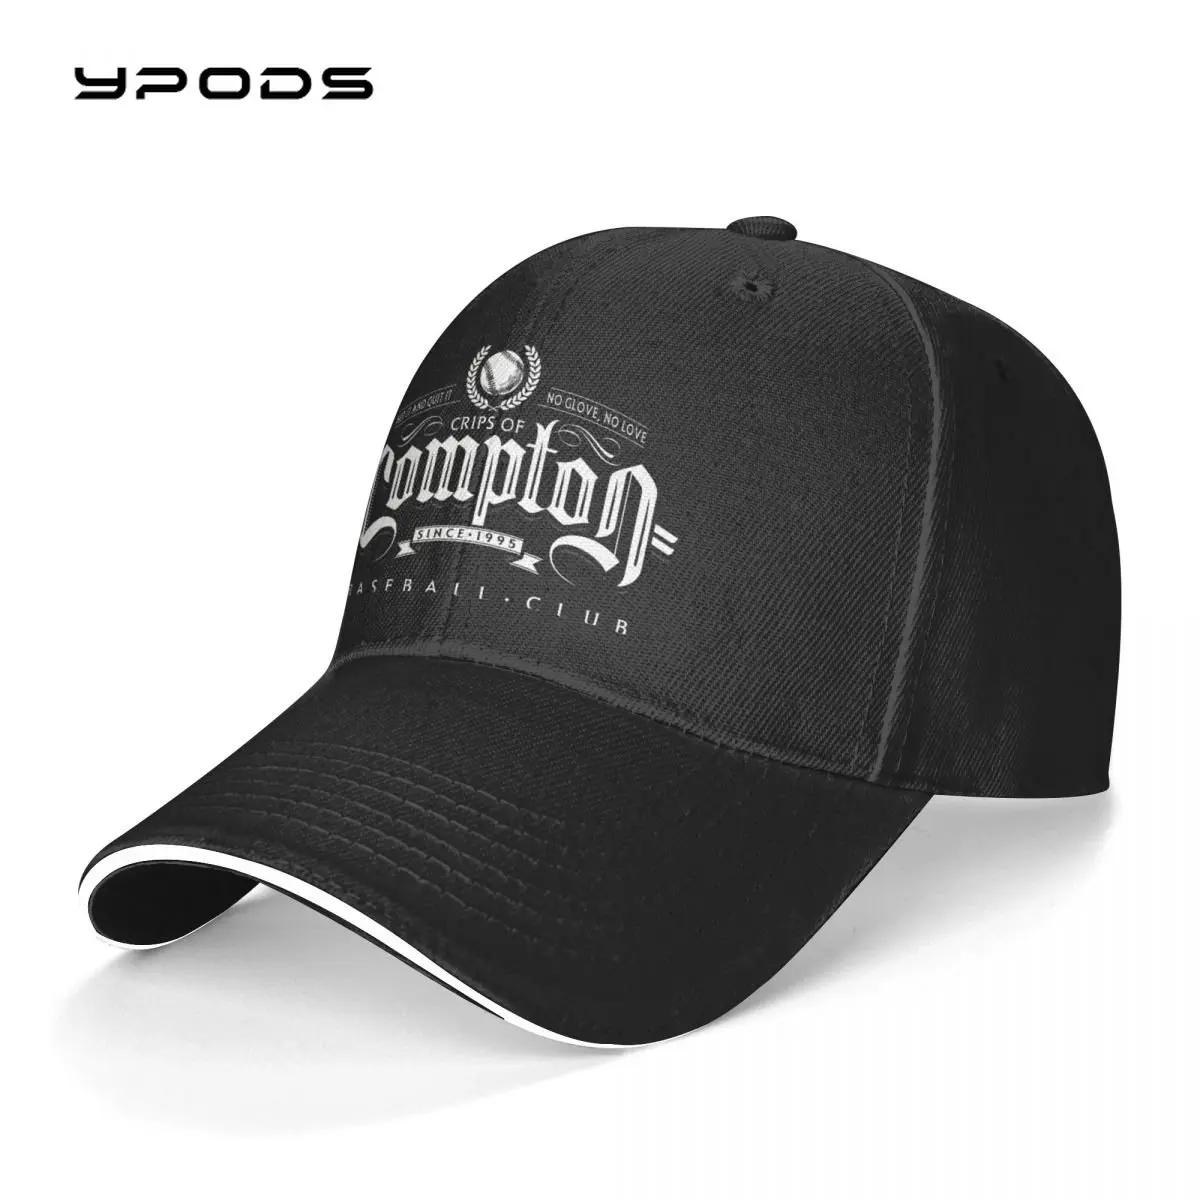 

Baseball Cap Men Compton Crips Fashion Caps Hats for Logo Asquette Homme Dad Hat for Men Trucker Cap